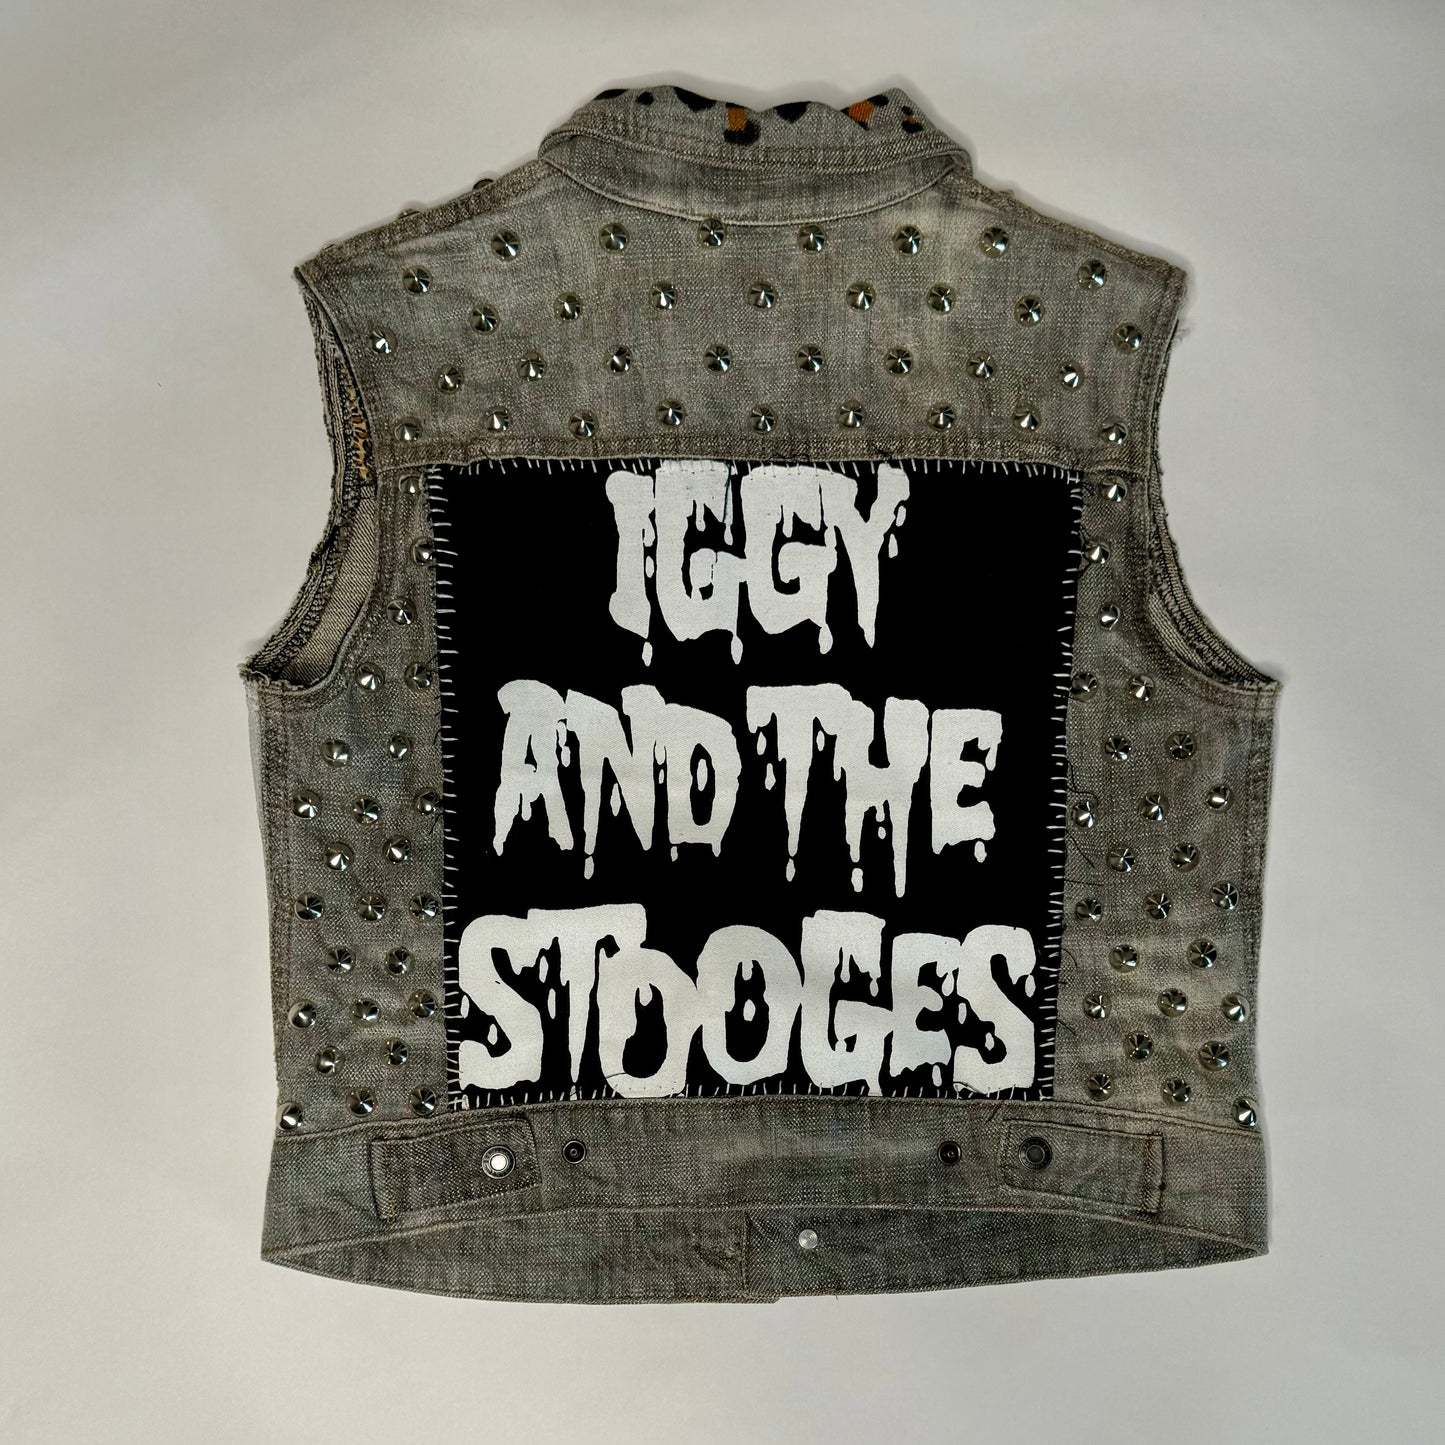 Iggy MC5 Custom Studded / Hand Painted vest